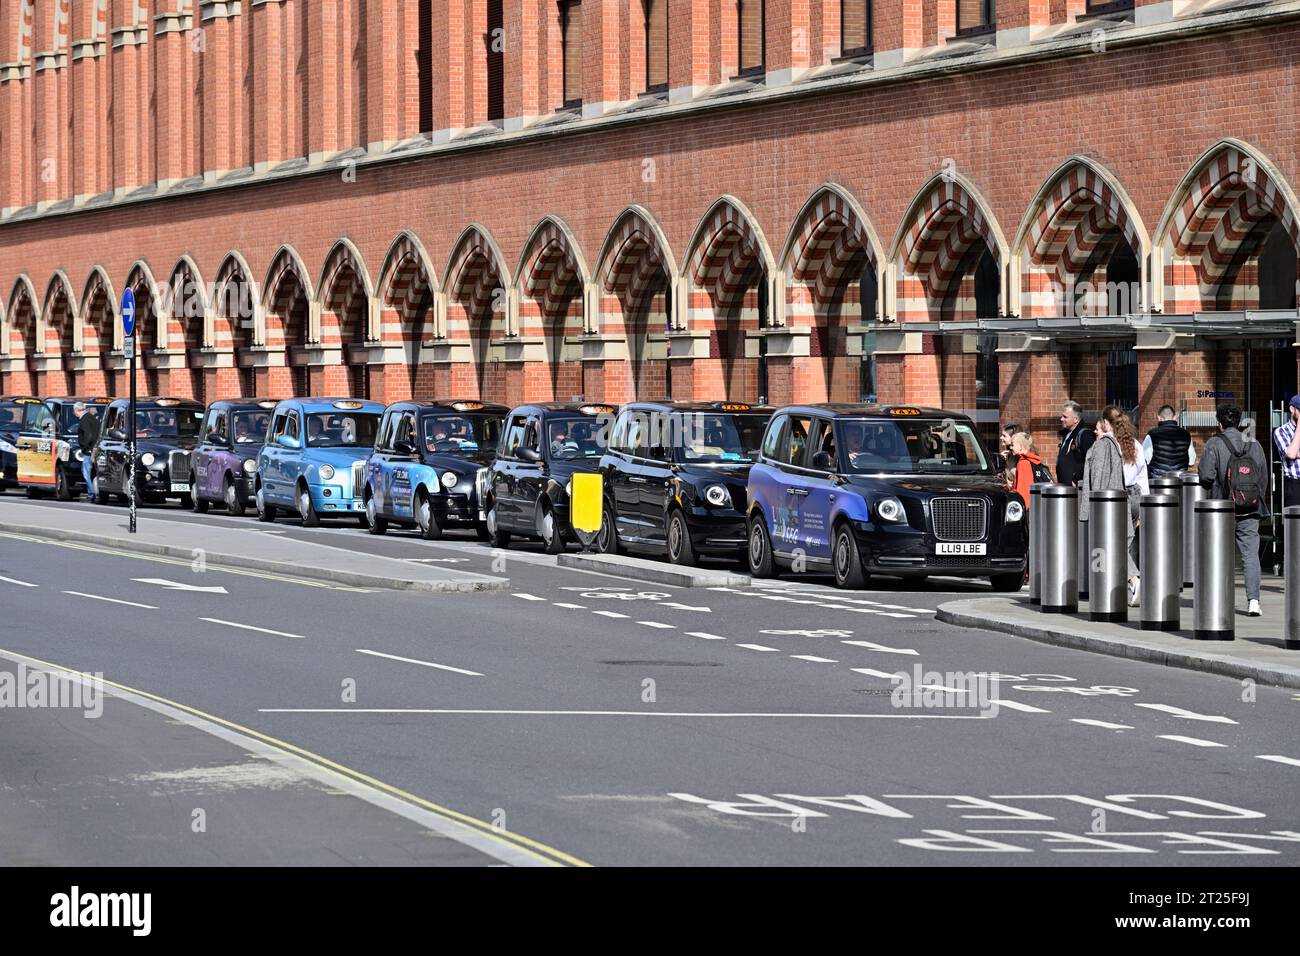 St Pancras International Railway Station taxi rank, Midland Road, London, United Kingdom Stock Photo